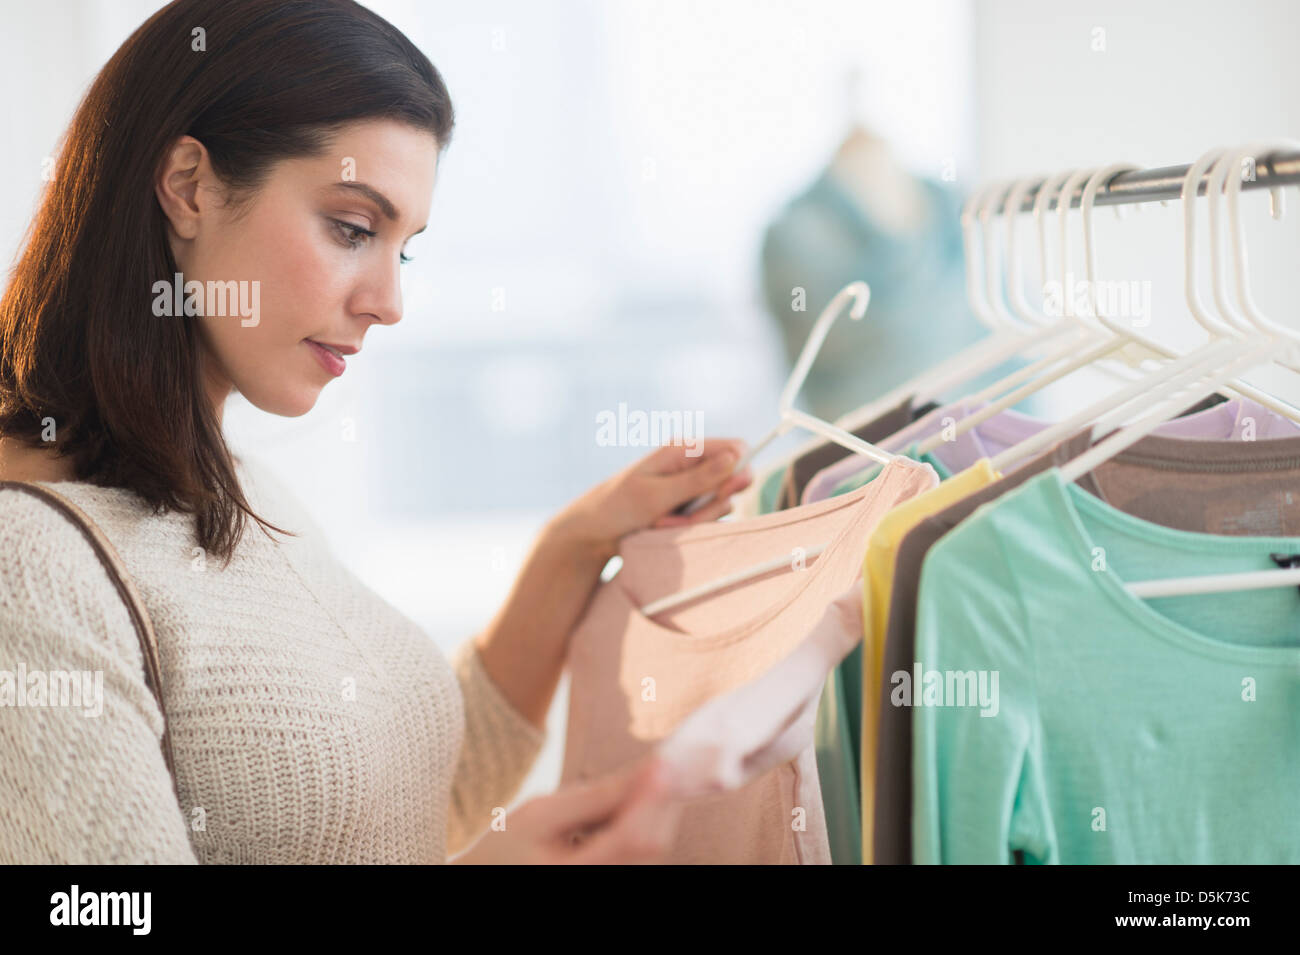 Woman looking at blouses at store Stock Photo